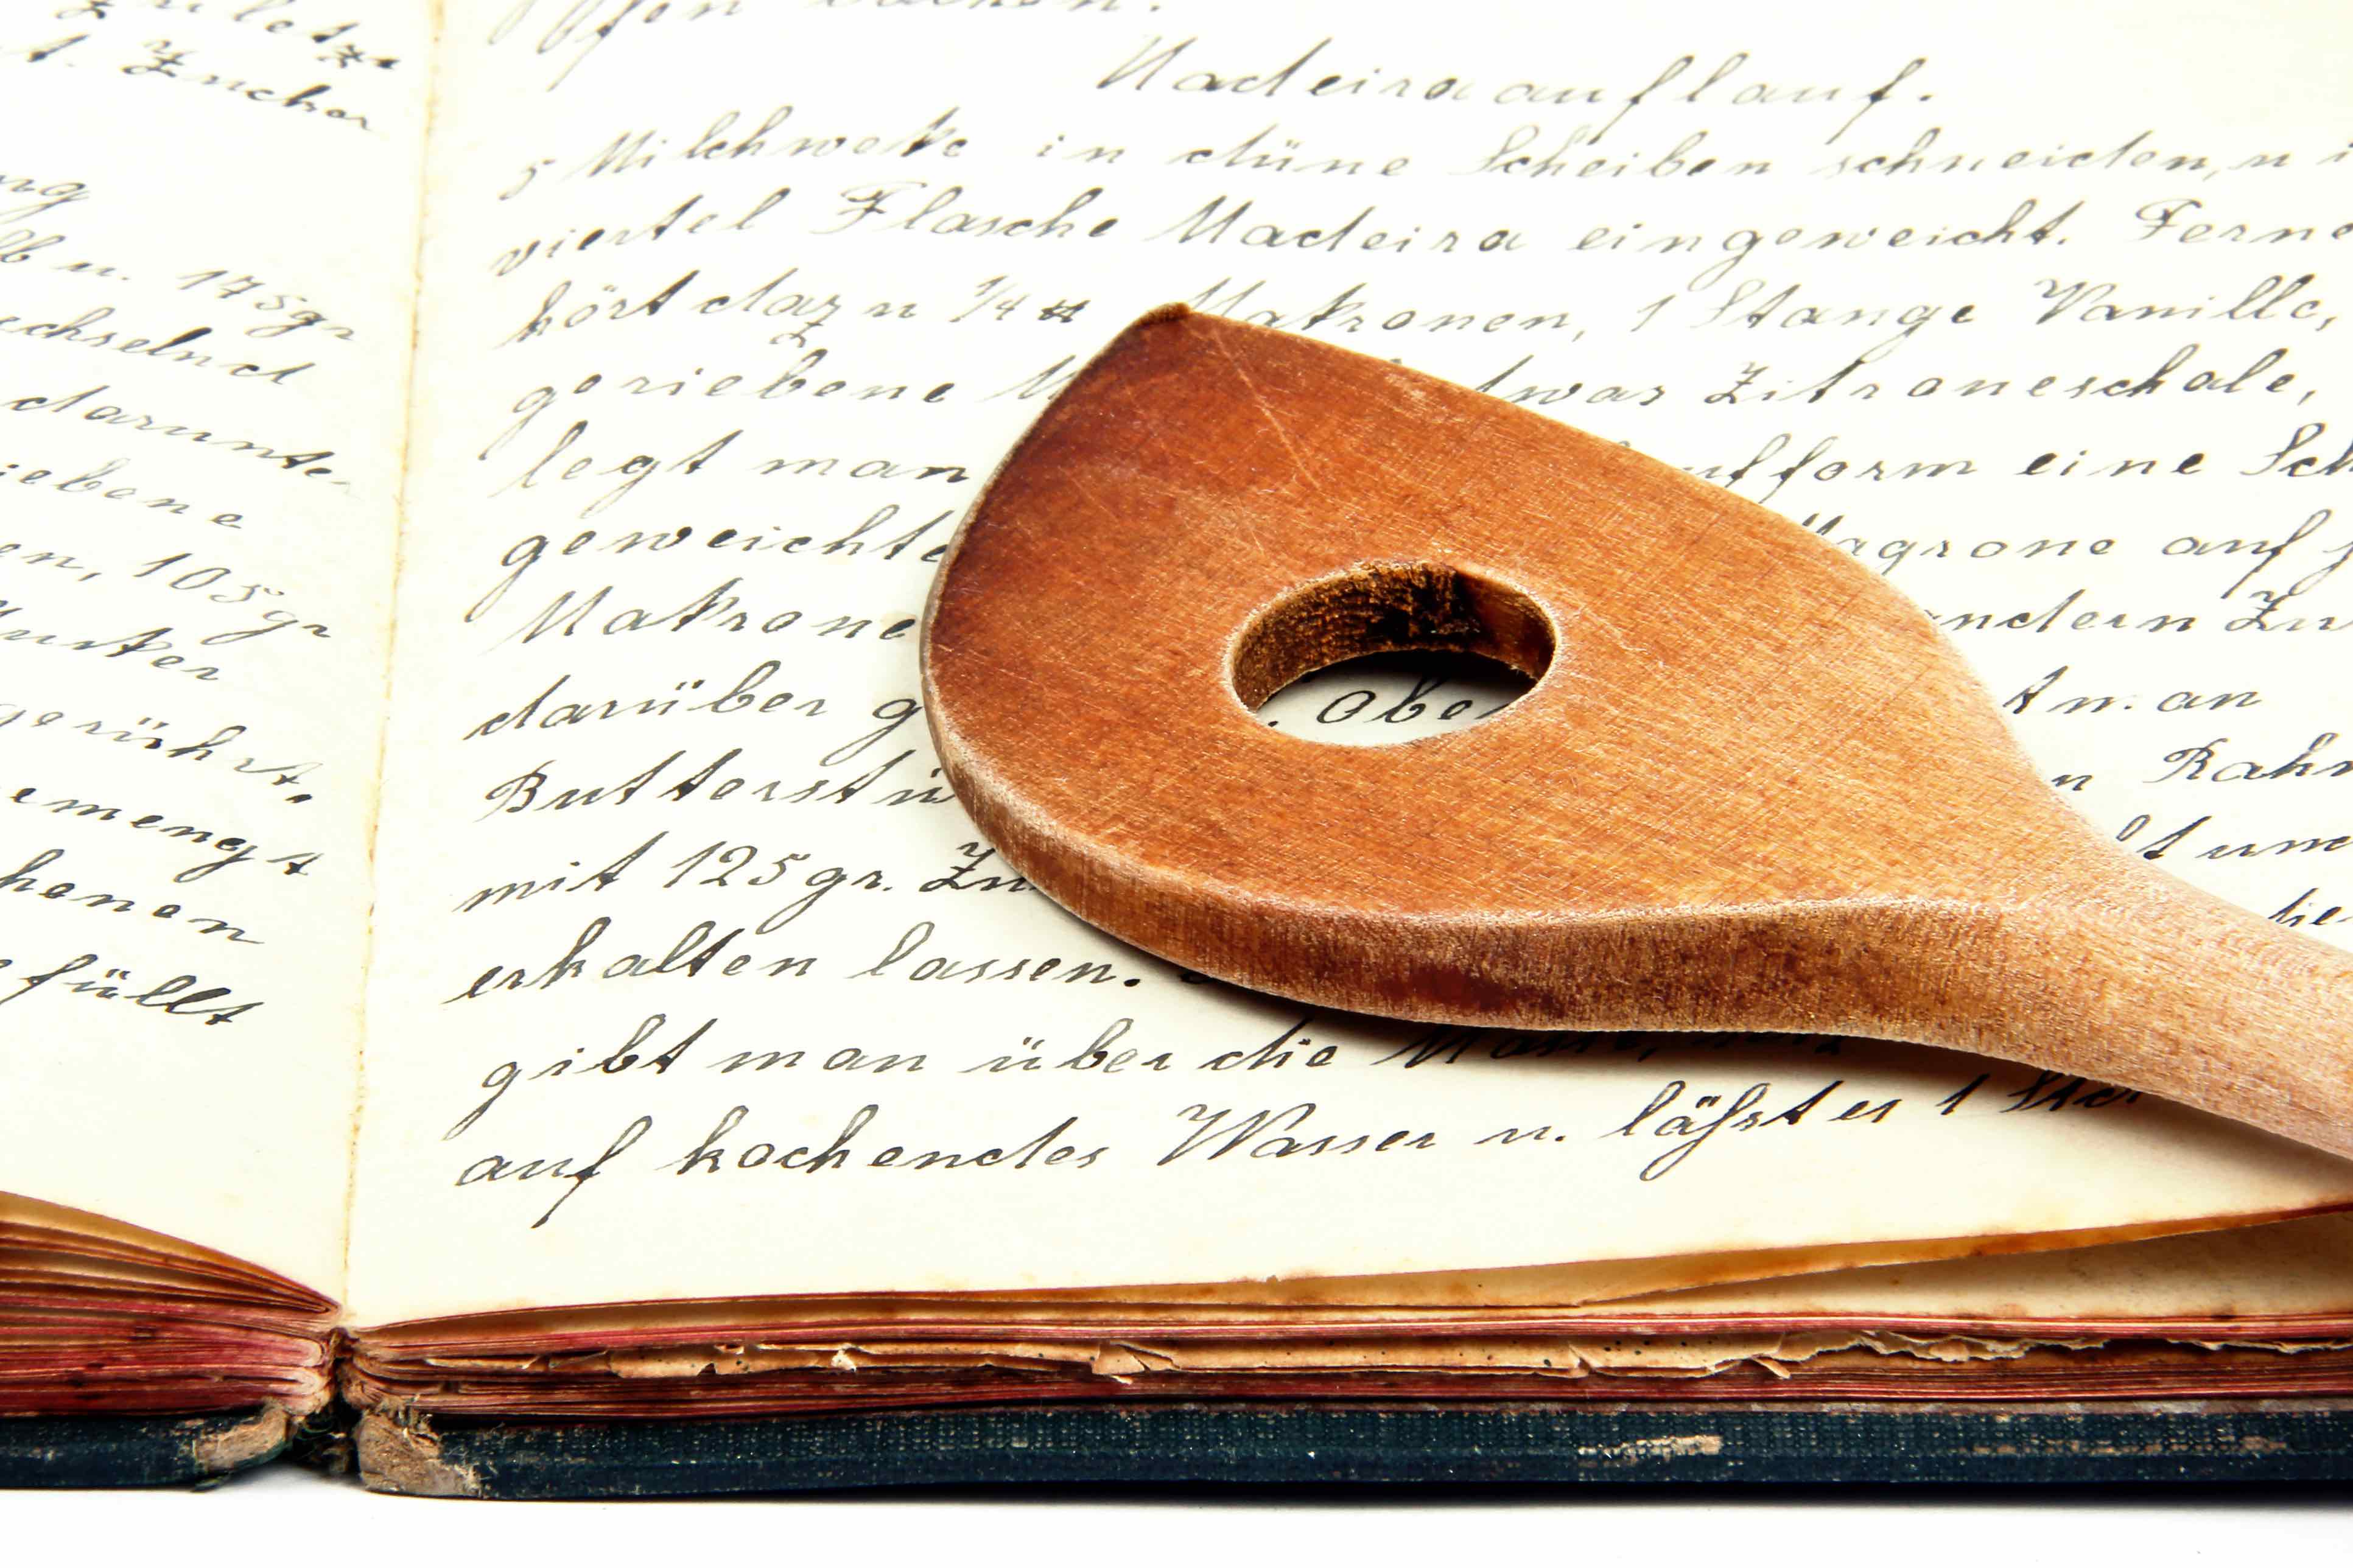 Historisches Kochbuch mit Holz-Kochlöffel